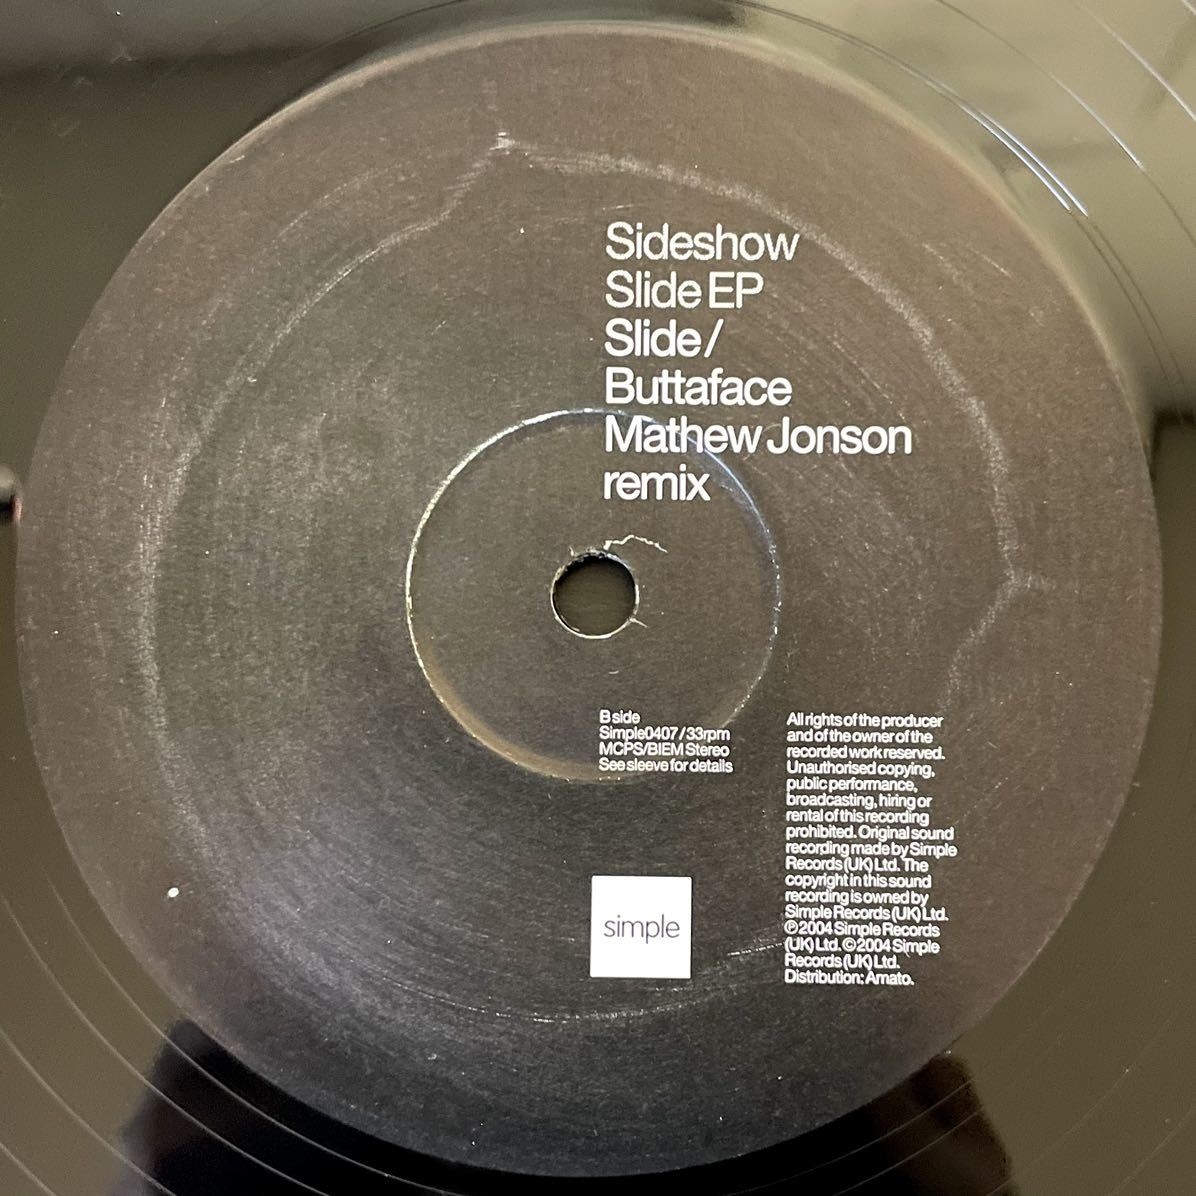 【HOUSE】【TECHNO】Sideshow - Slide EP / Simple Records simple 0407 / VINYL 12 / UK / Mathew Jonson_画像3